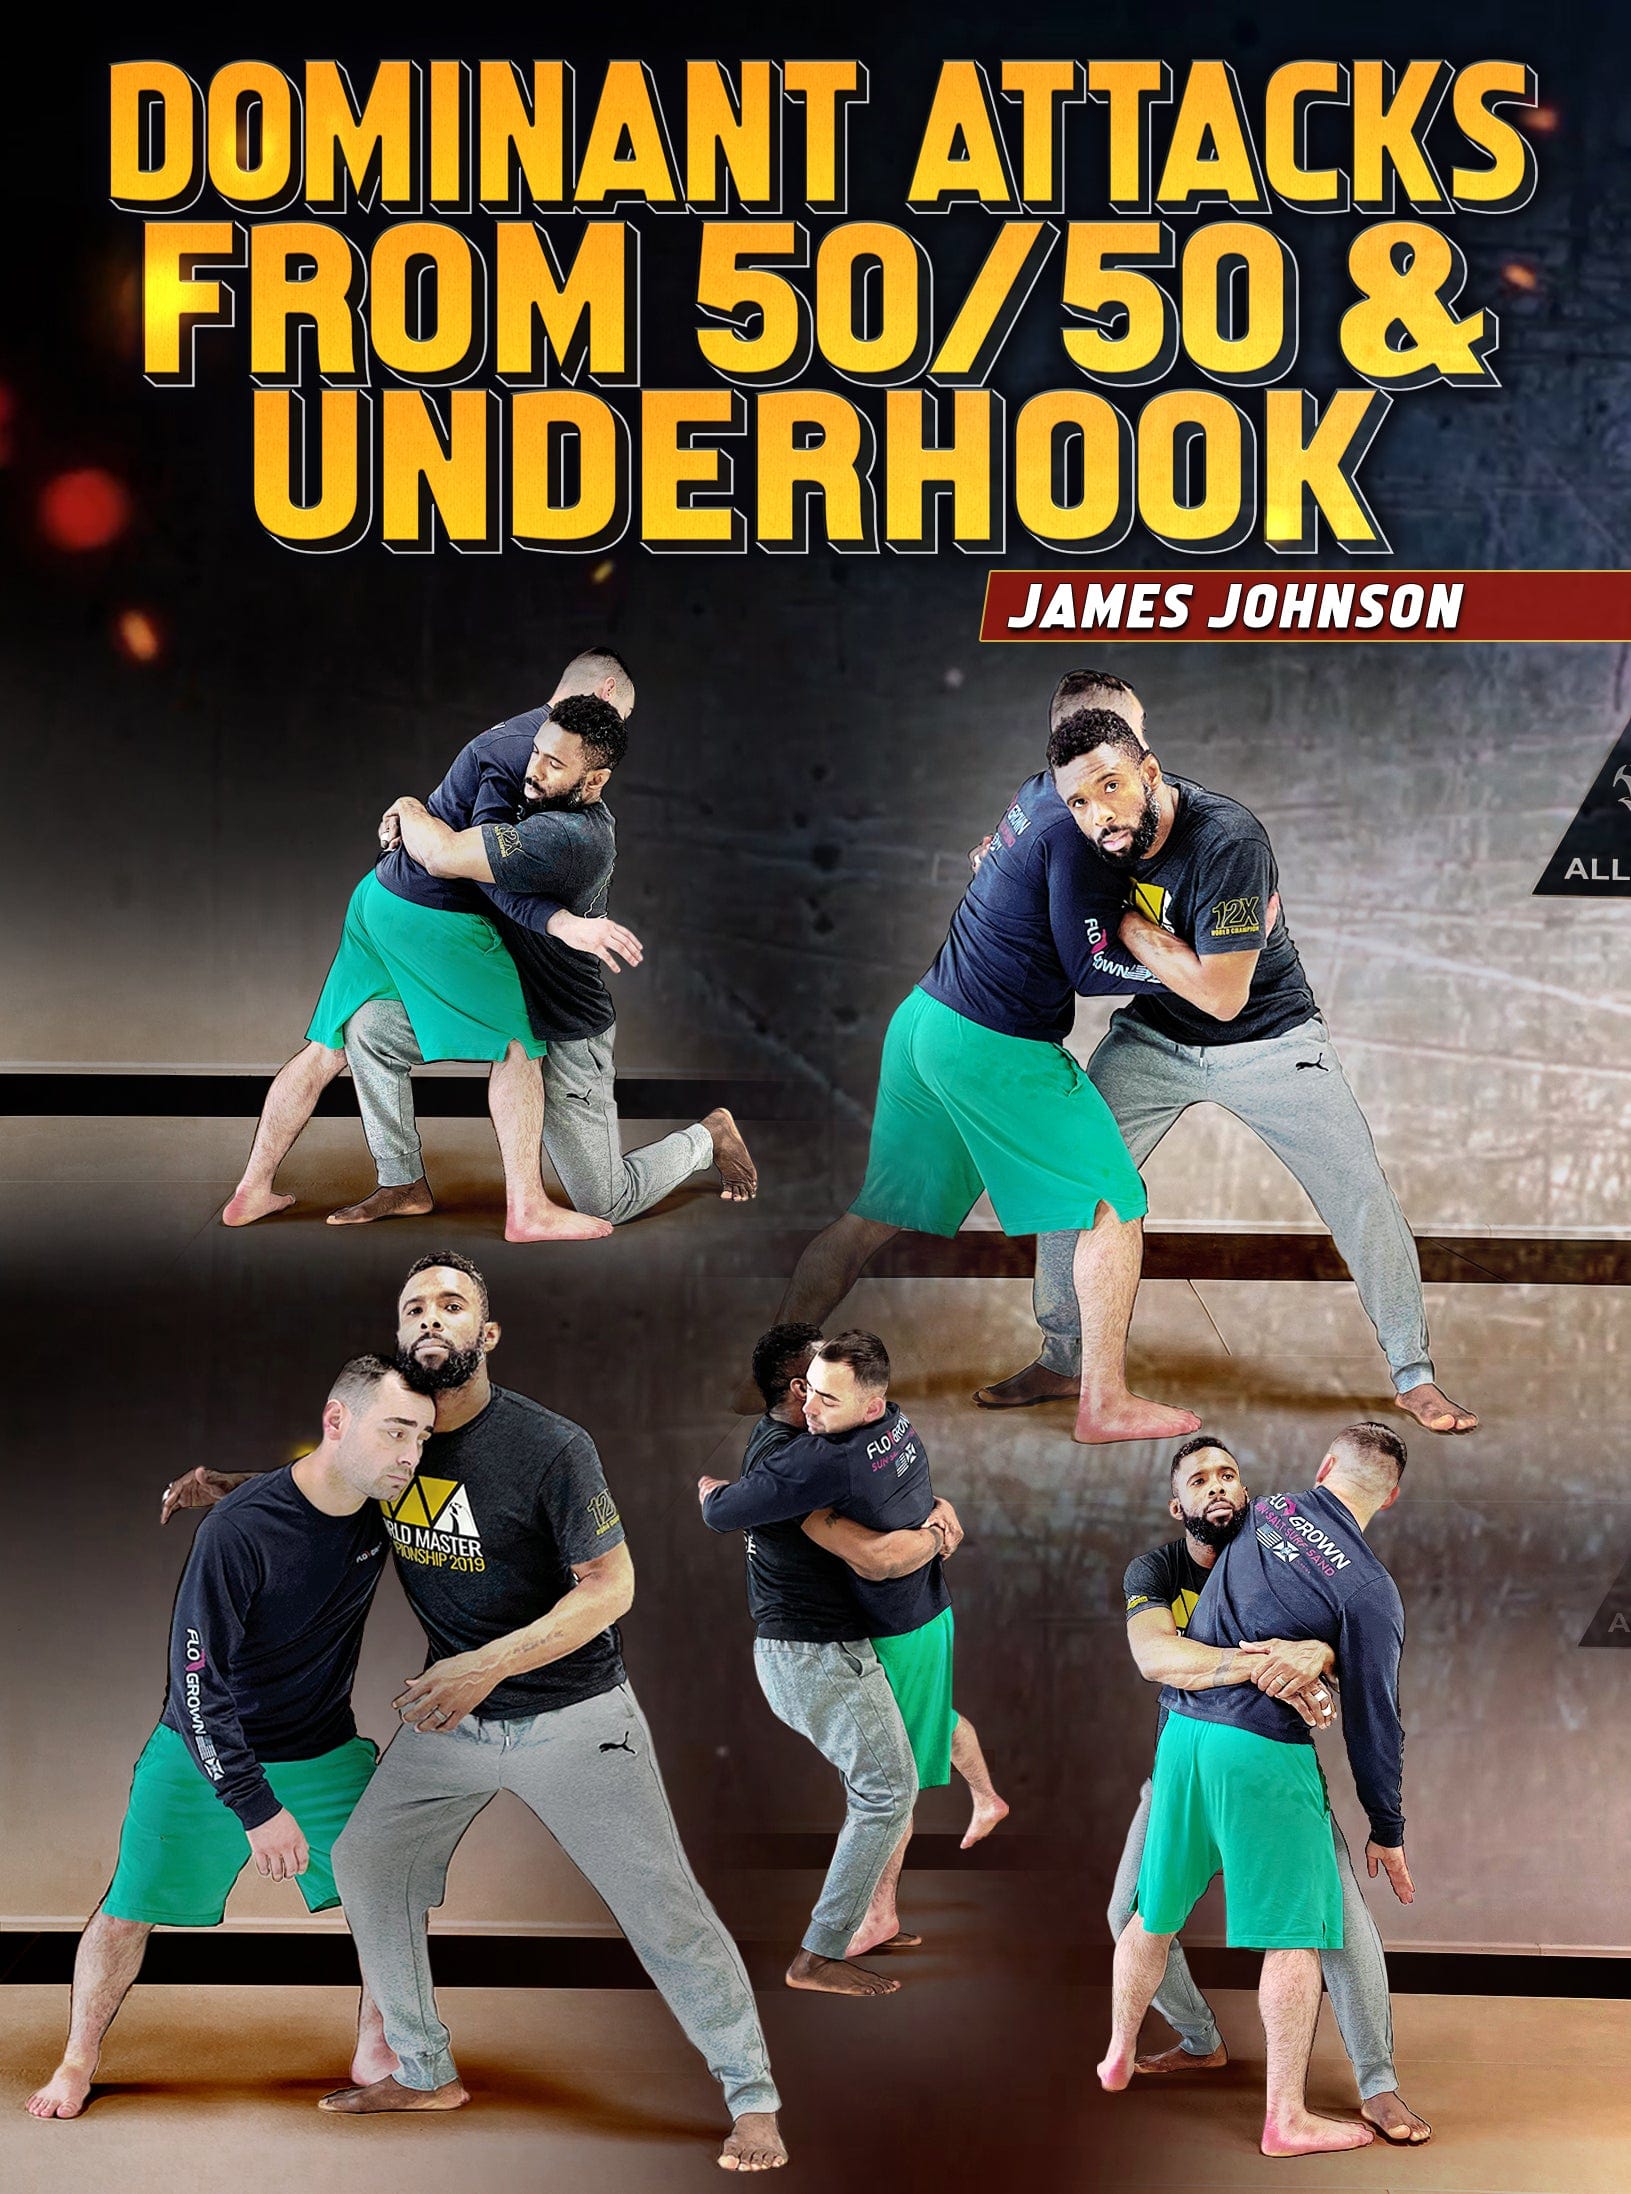 Dominant Attacks From 50/50 & Underhook by James Johnson - Fanatic Wrestling